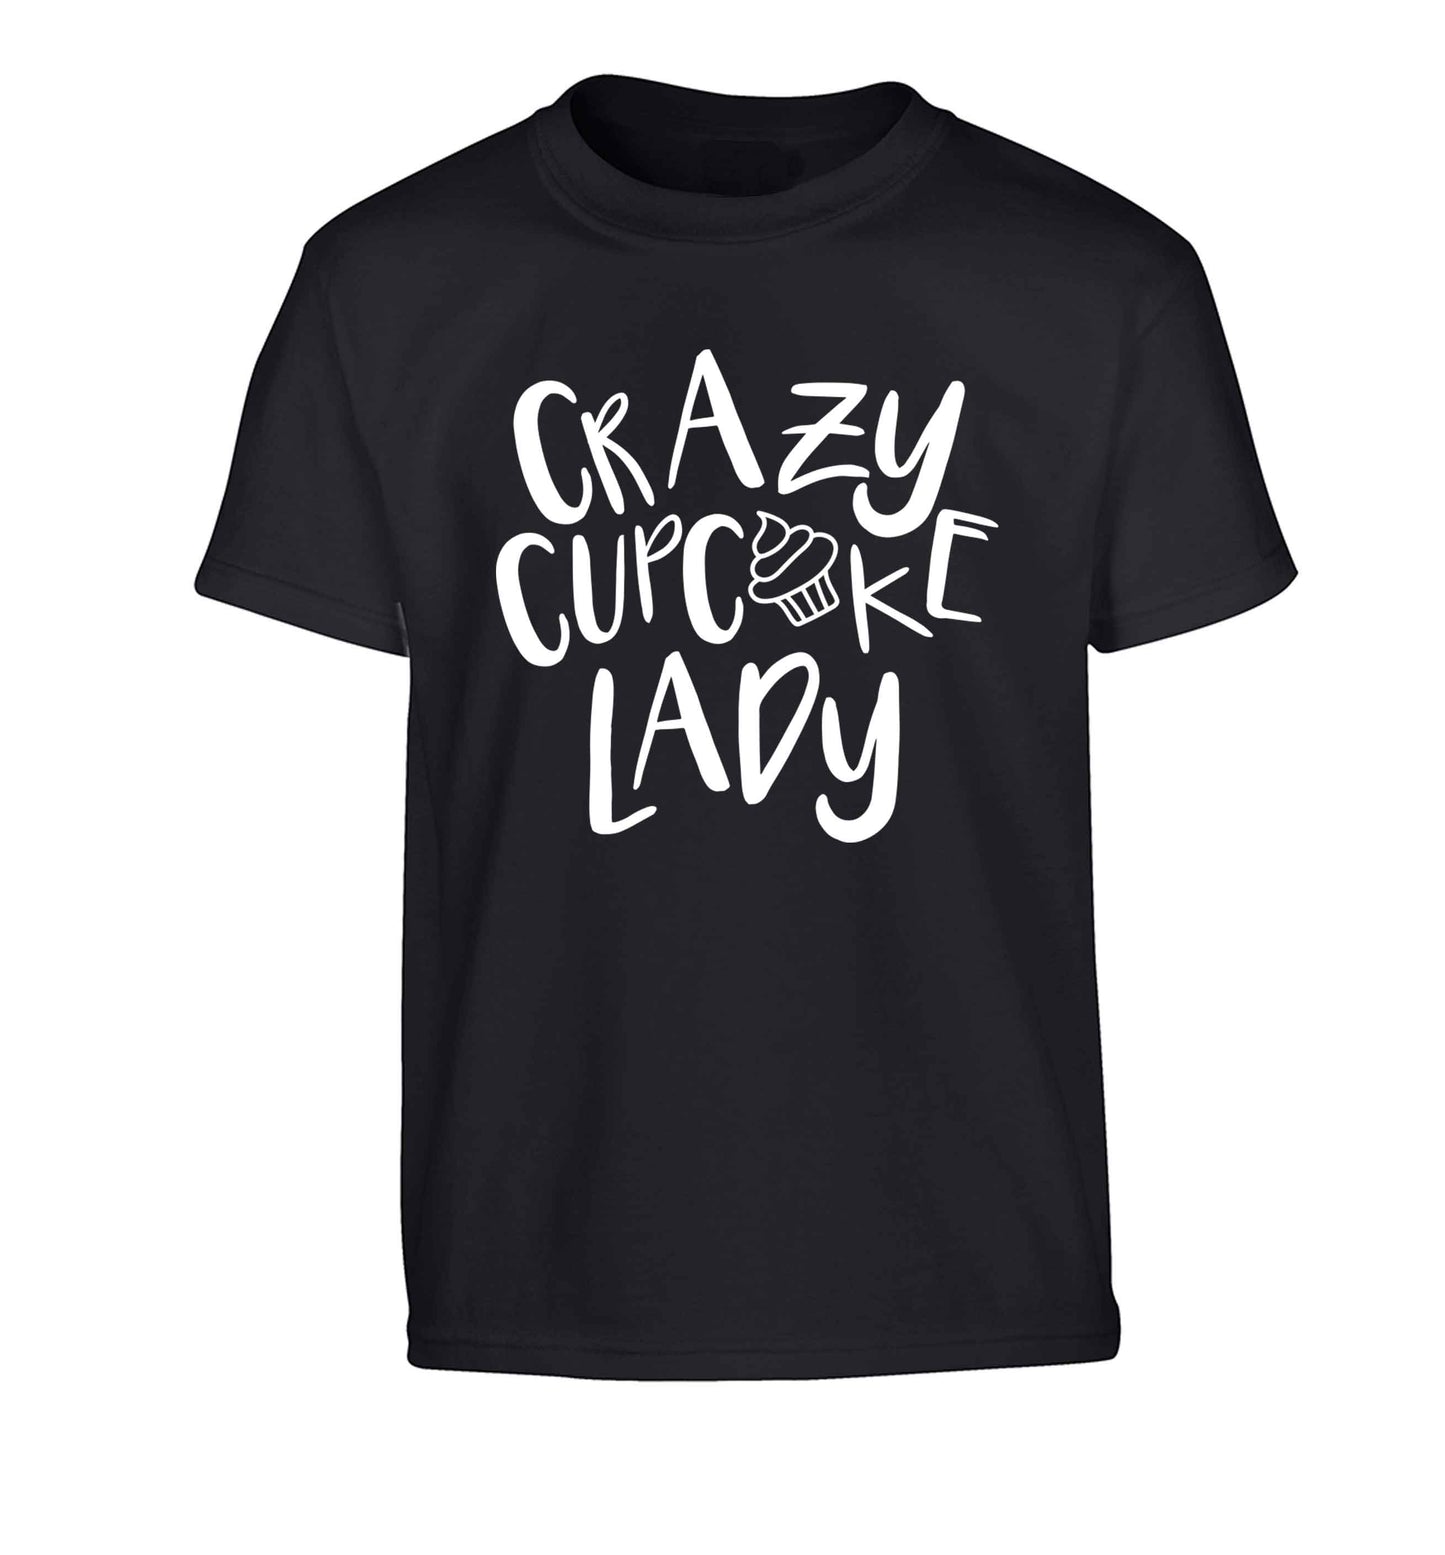 Crazy cupcake lady Children's black Tshirt 12-13 Years